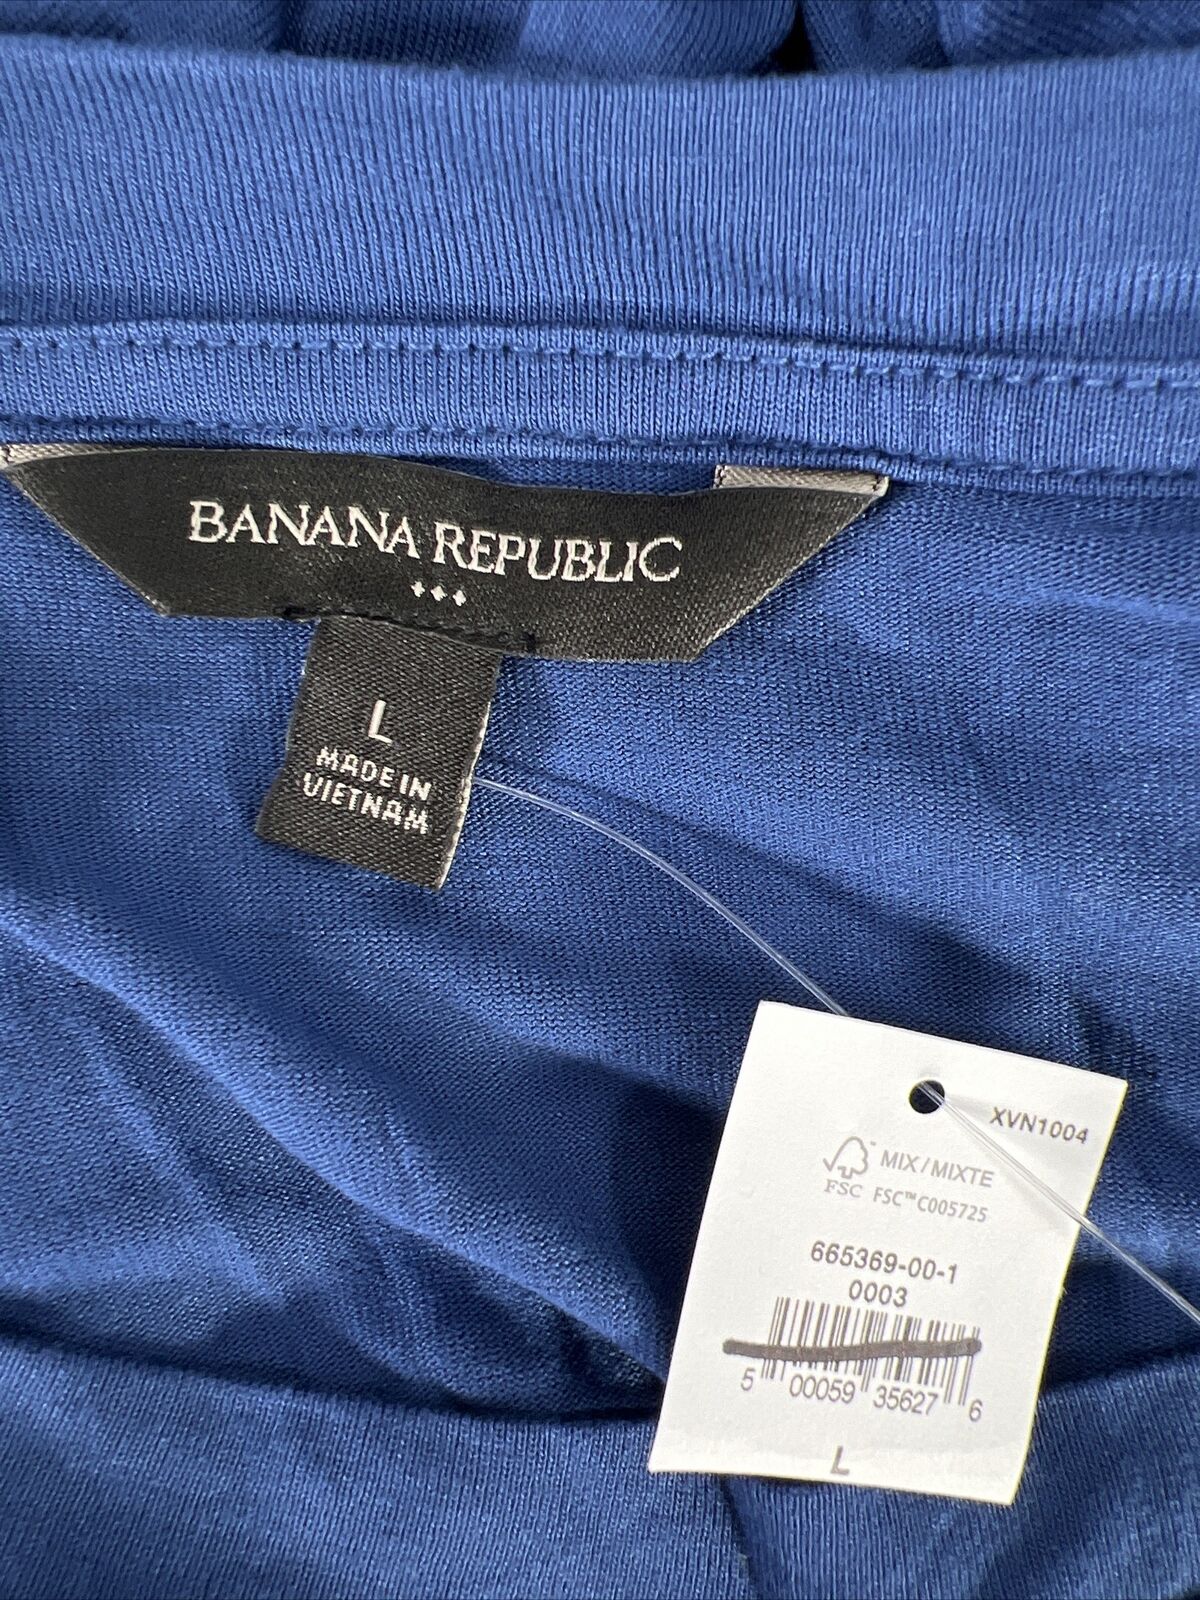 NUEVO Top azul de manga larga con cintura ceñida de Banana Republic para mujer - L